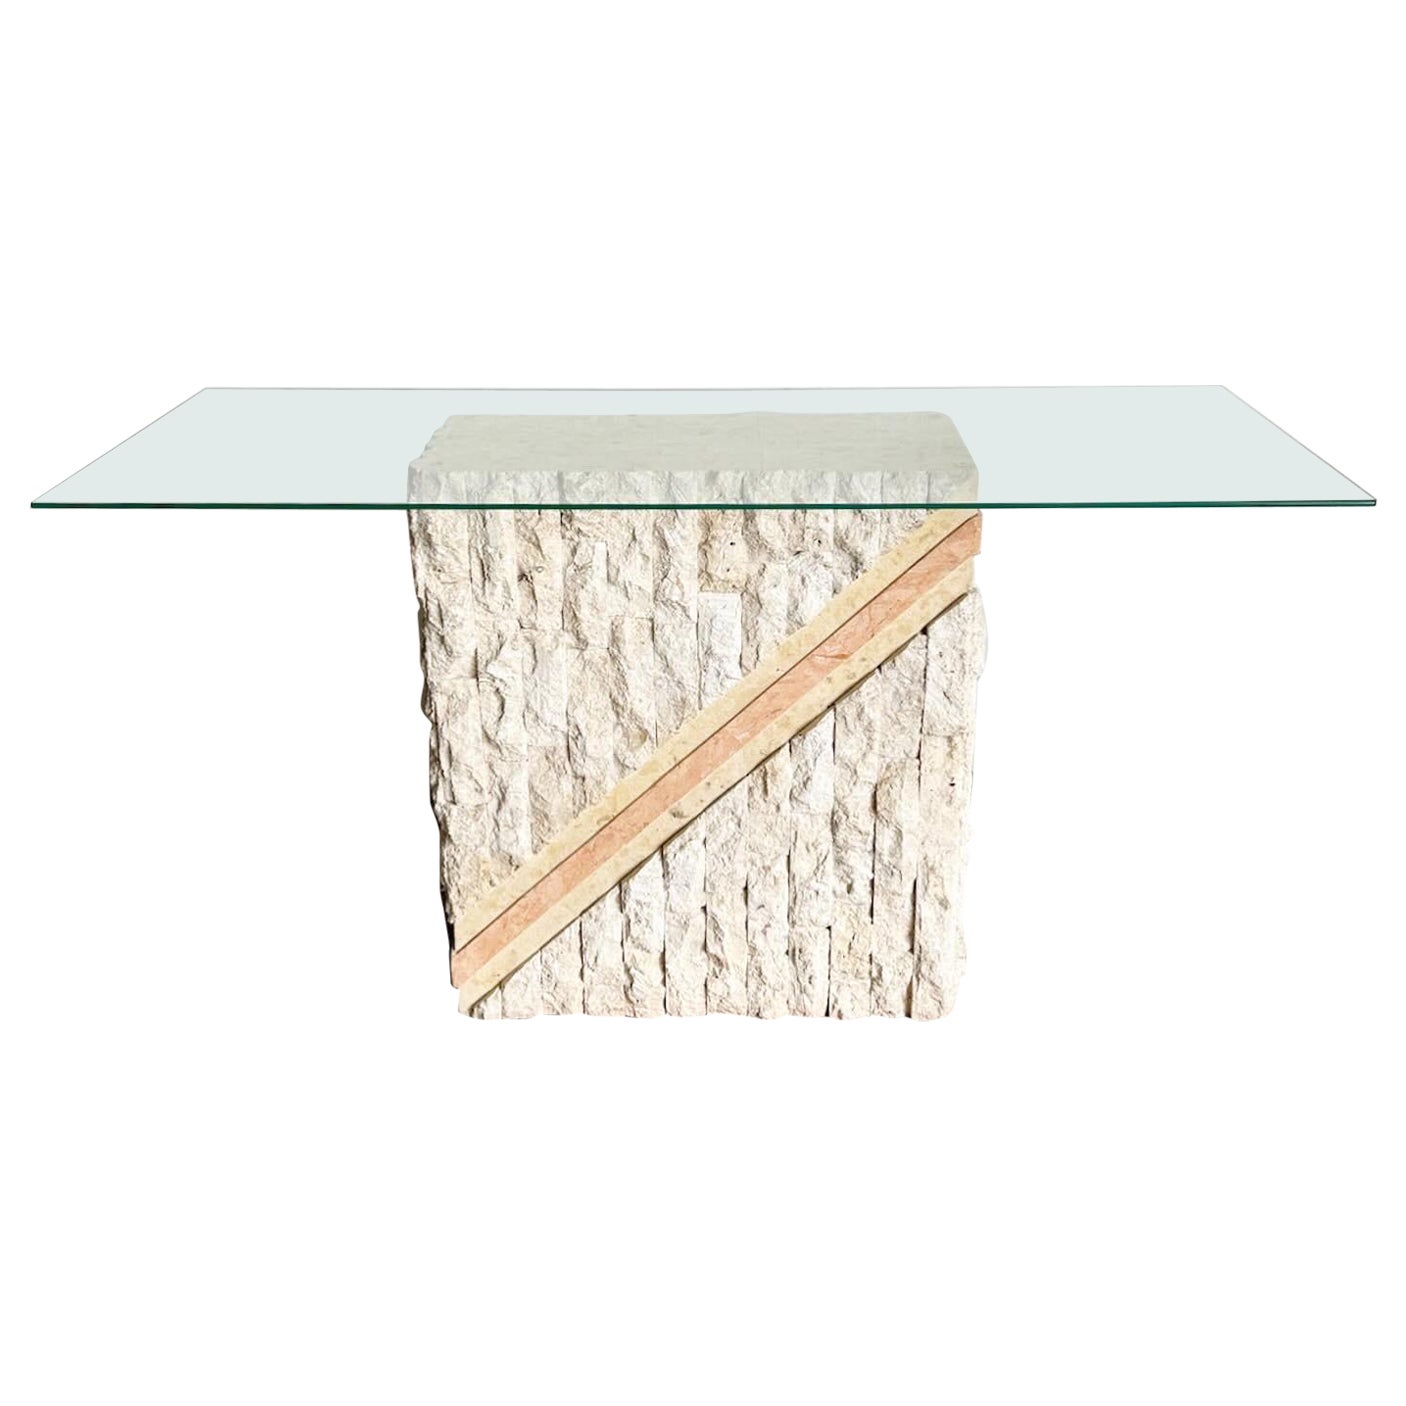 Table console postmoderne en pierre tessellée rose et beige